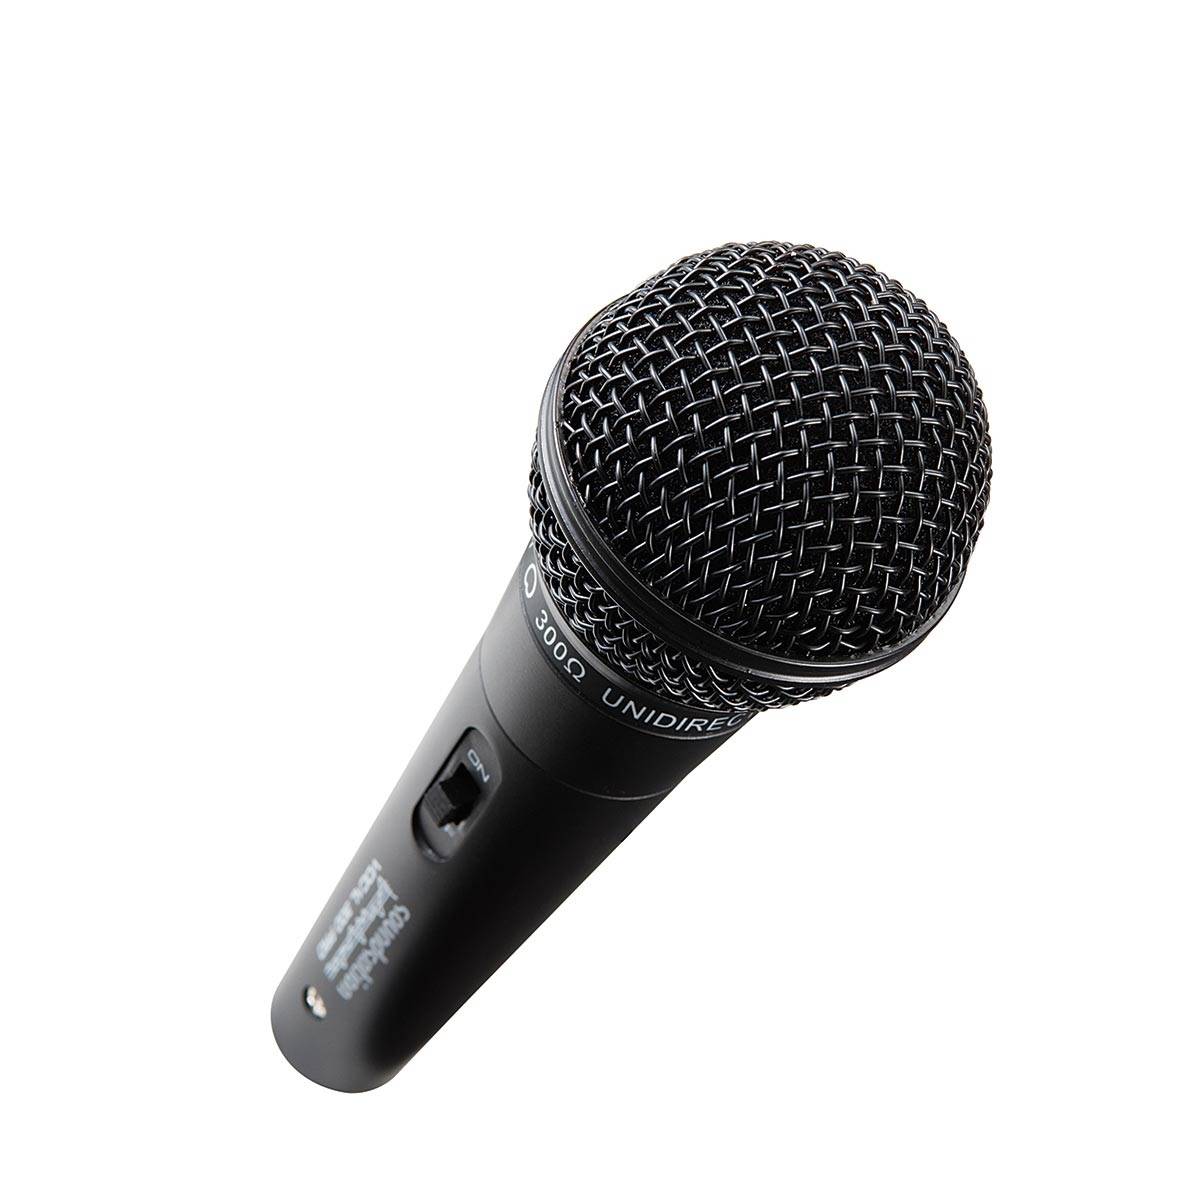 SOUNDSATION VOCAL 300 PRO Cardioid Dynamic Microphone